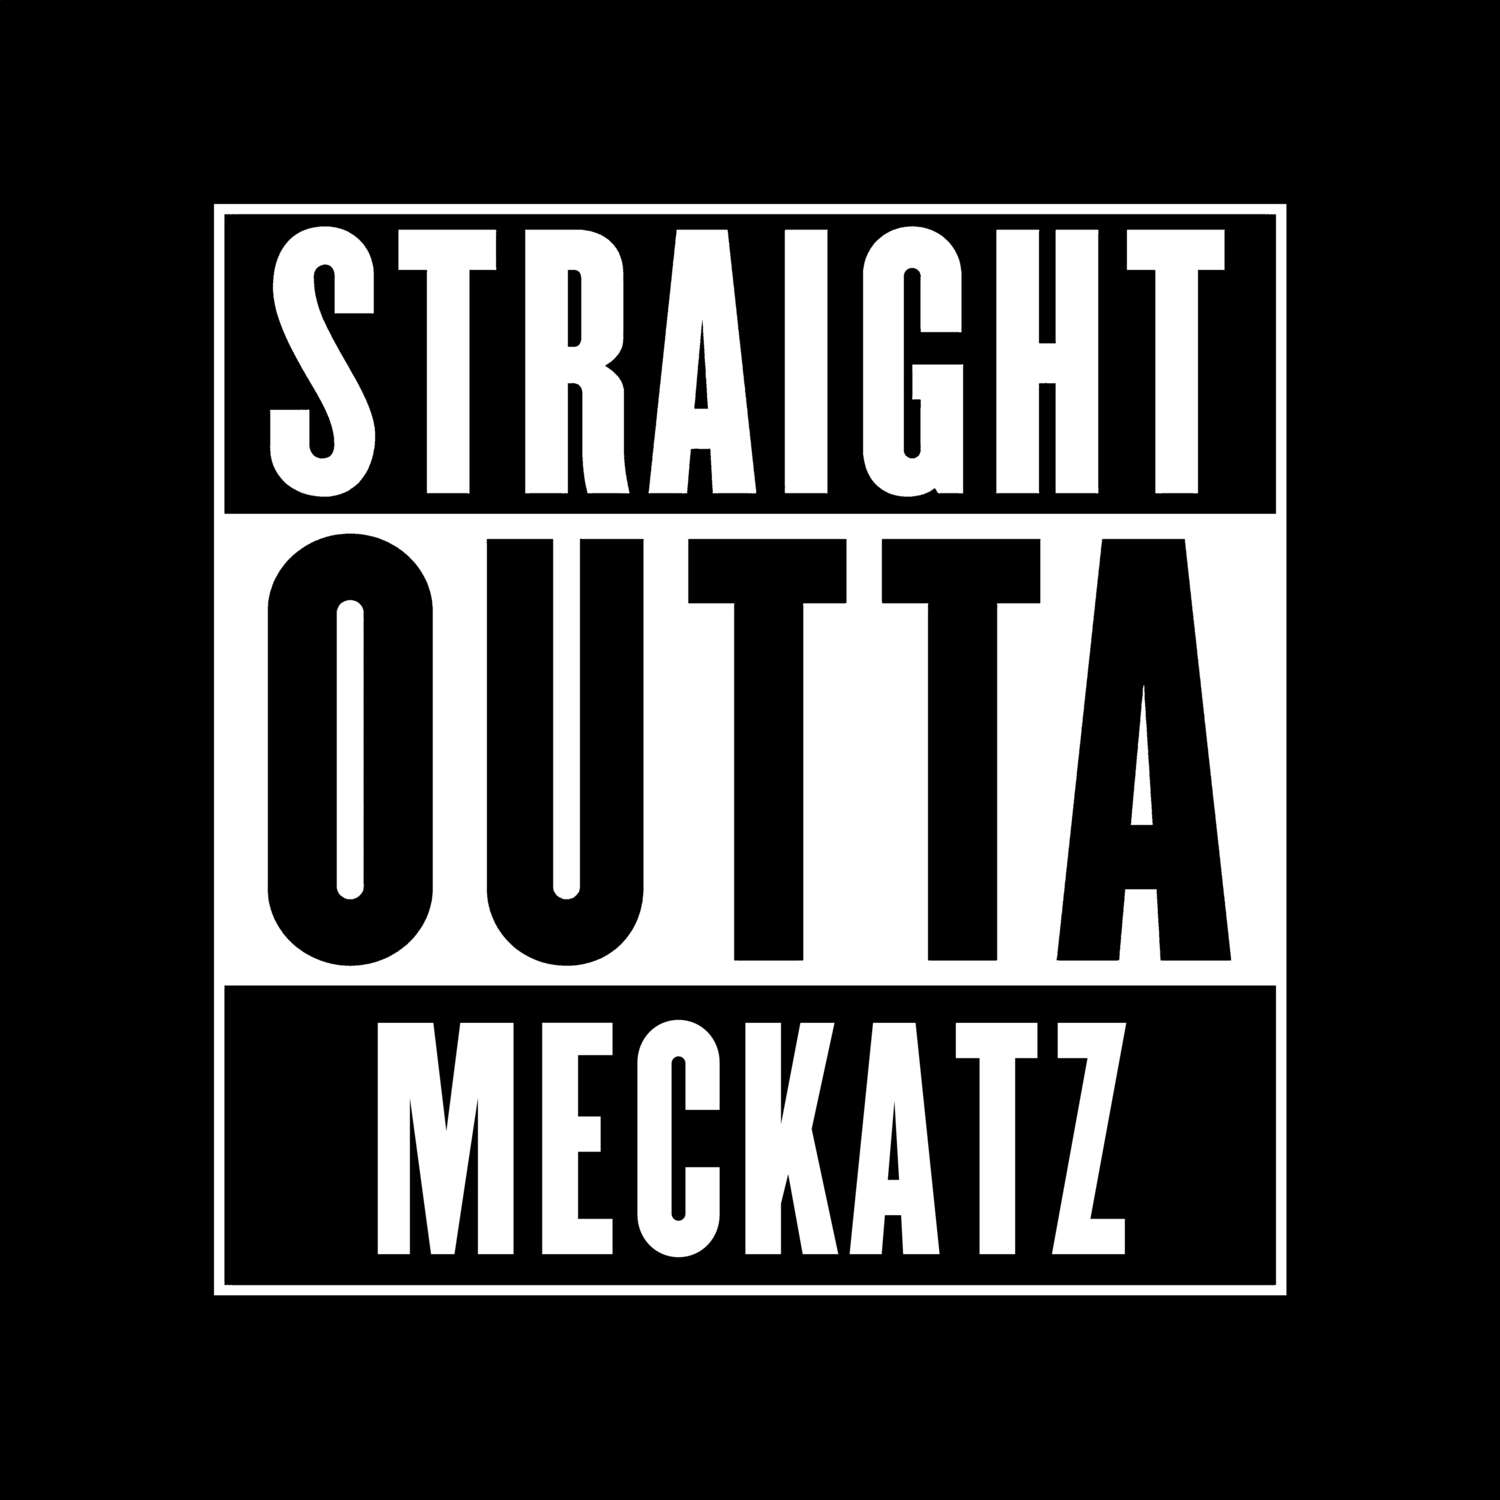 Meckatz T-Shirt »Straight Outta«